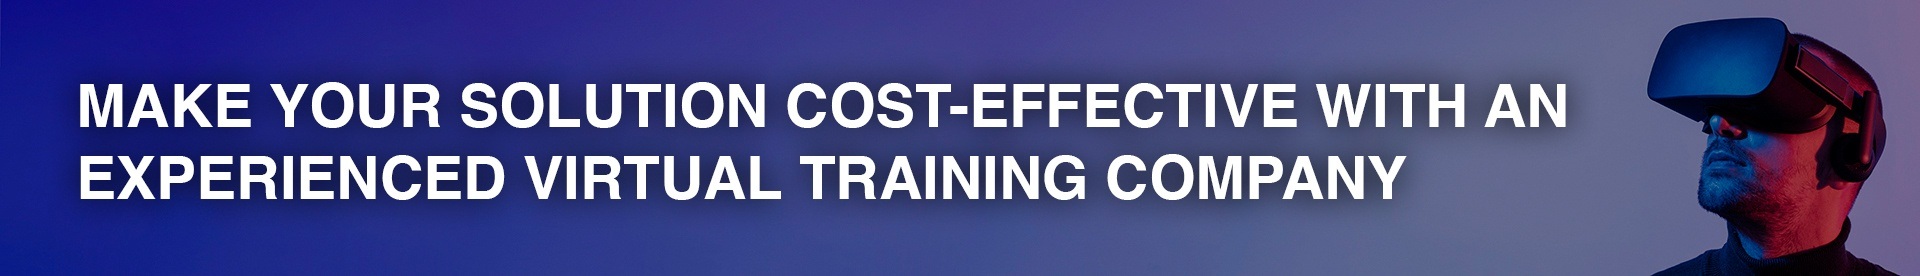 vr training cost